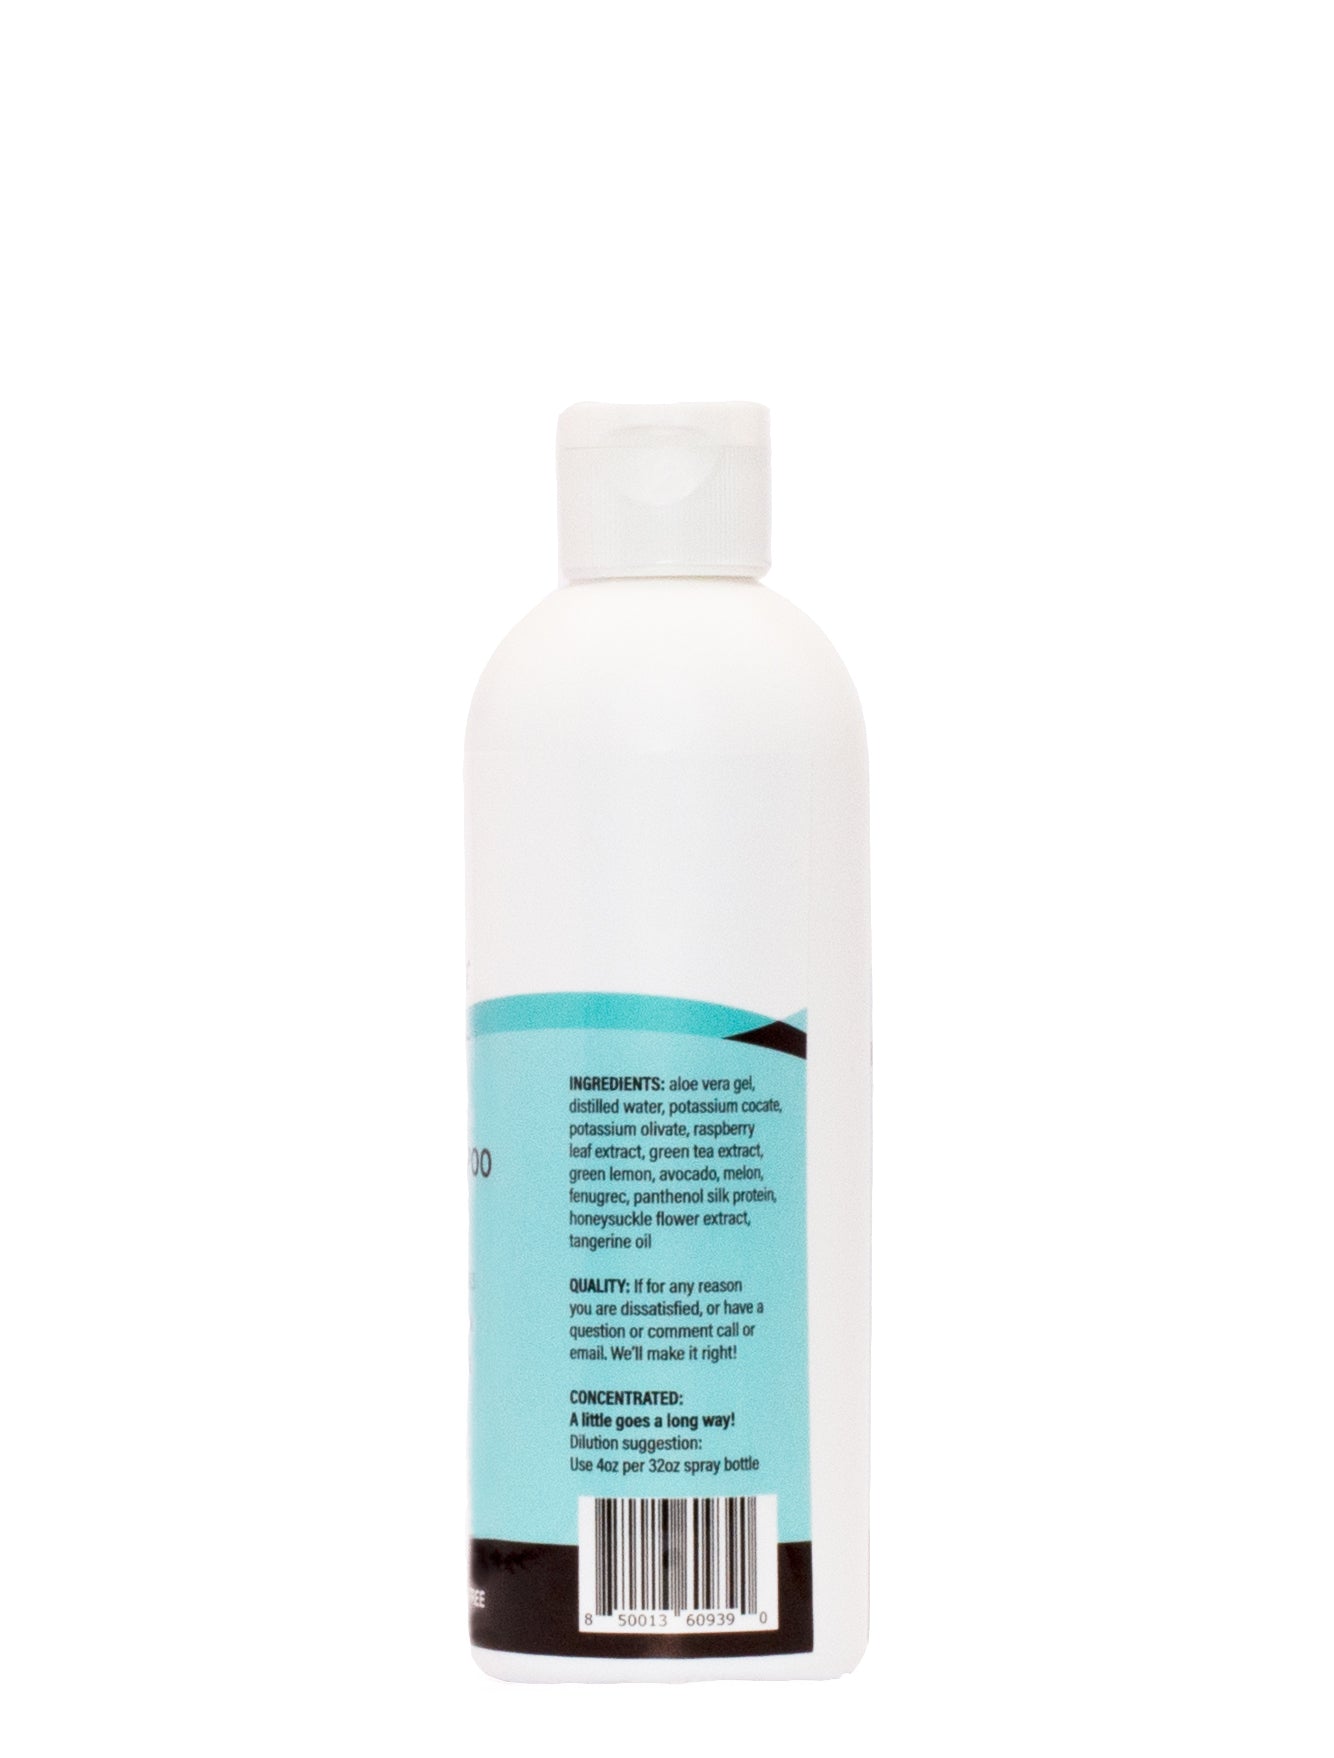 CD CLEAN 100% Natural Shampoo - 8oz  Calms Itchy, Sensitive Skin - Coat  Defense